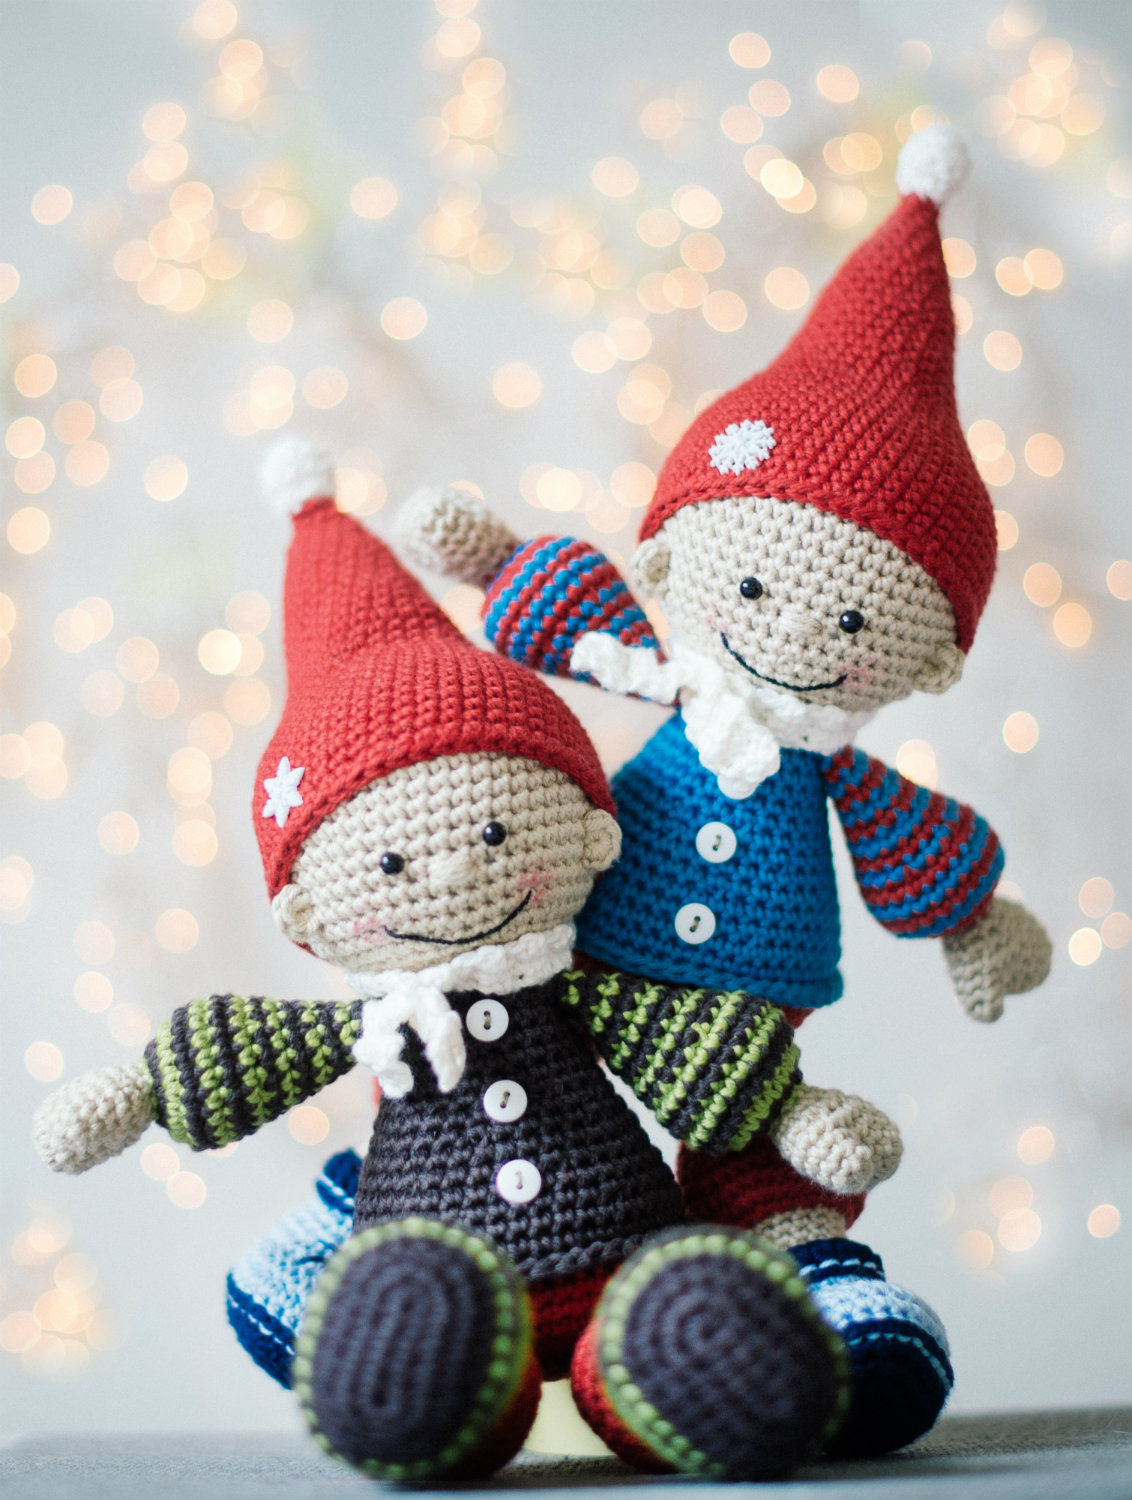 Crochet Amigurumi Patterns Jester The Christmas Gnome Amigurumi And Crochet Patterns Lilleliis